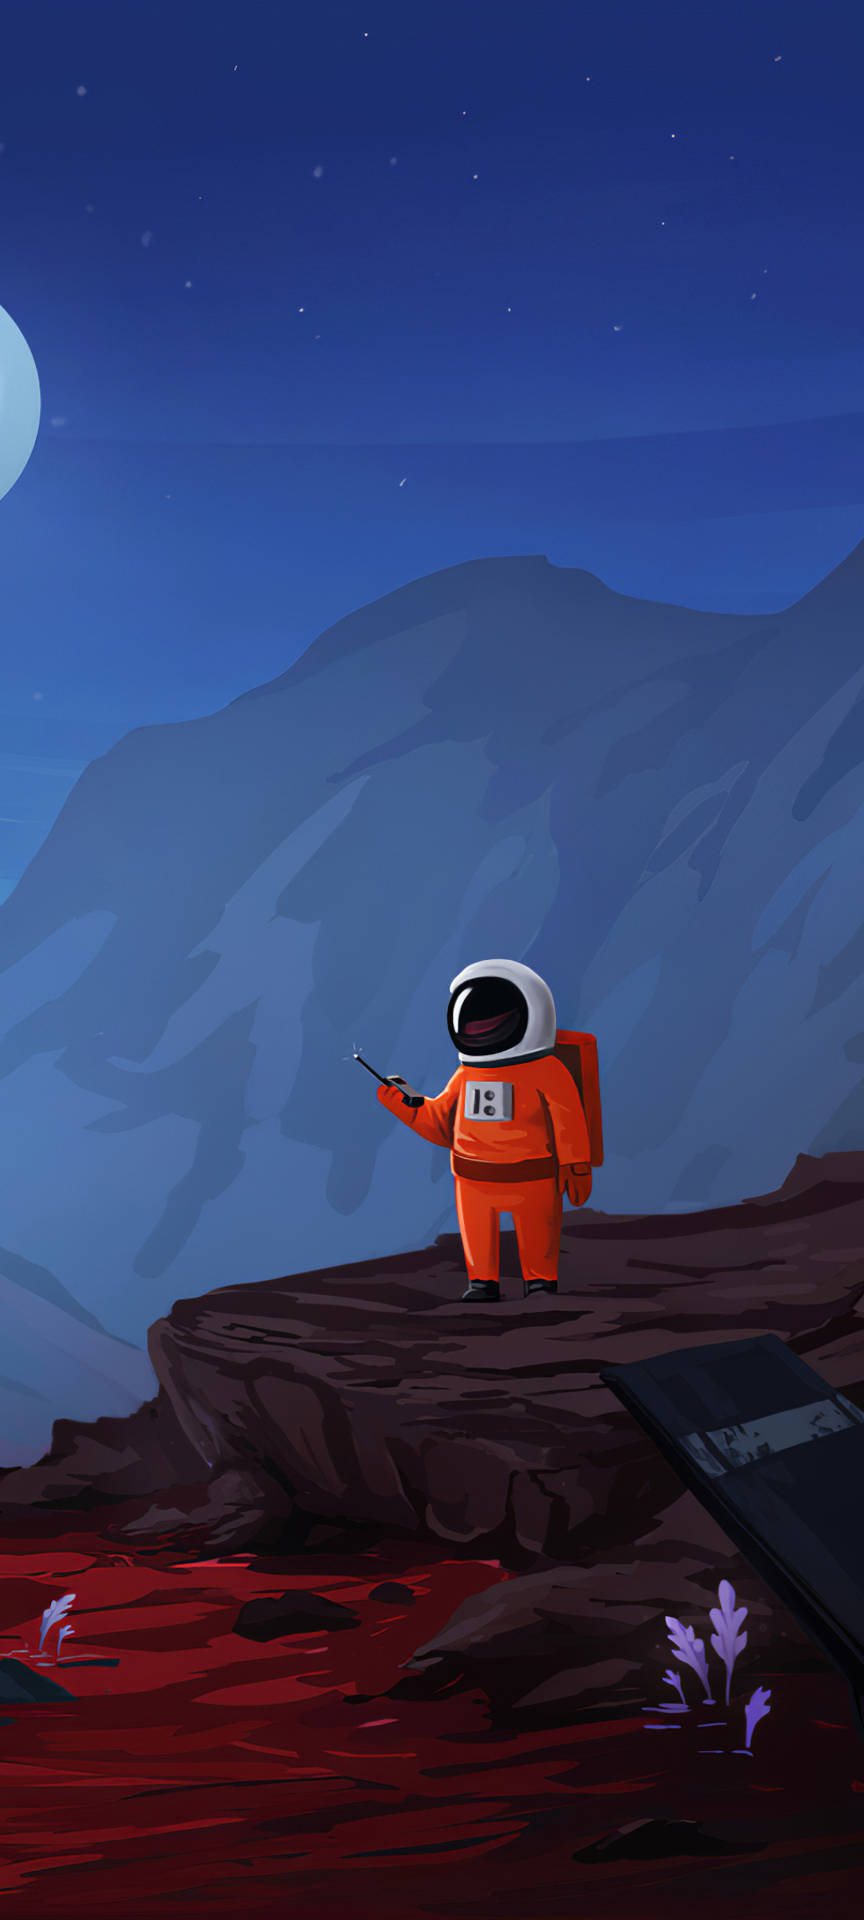 Cartoon Astronaut With Walkie-talkie Background